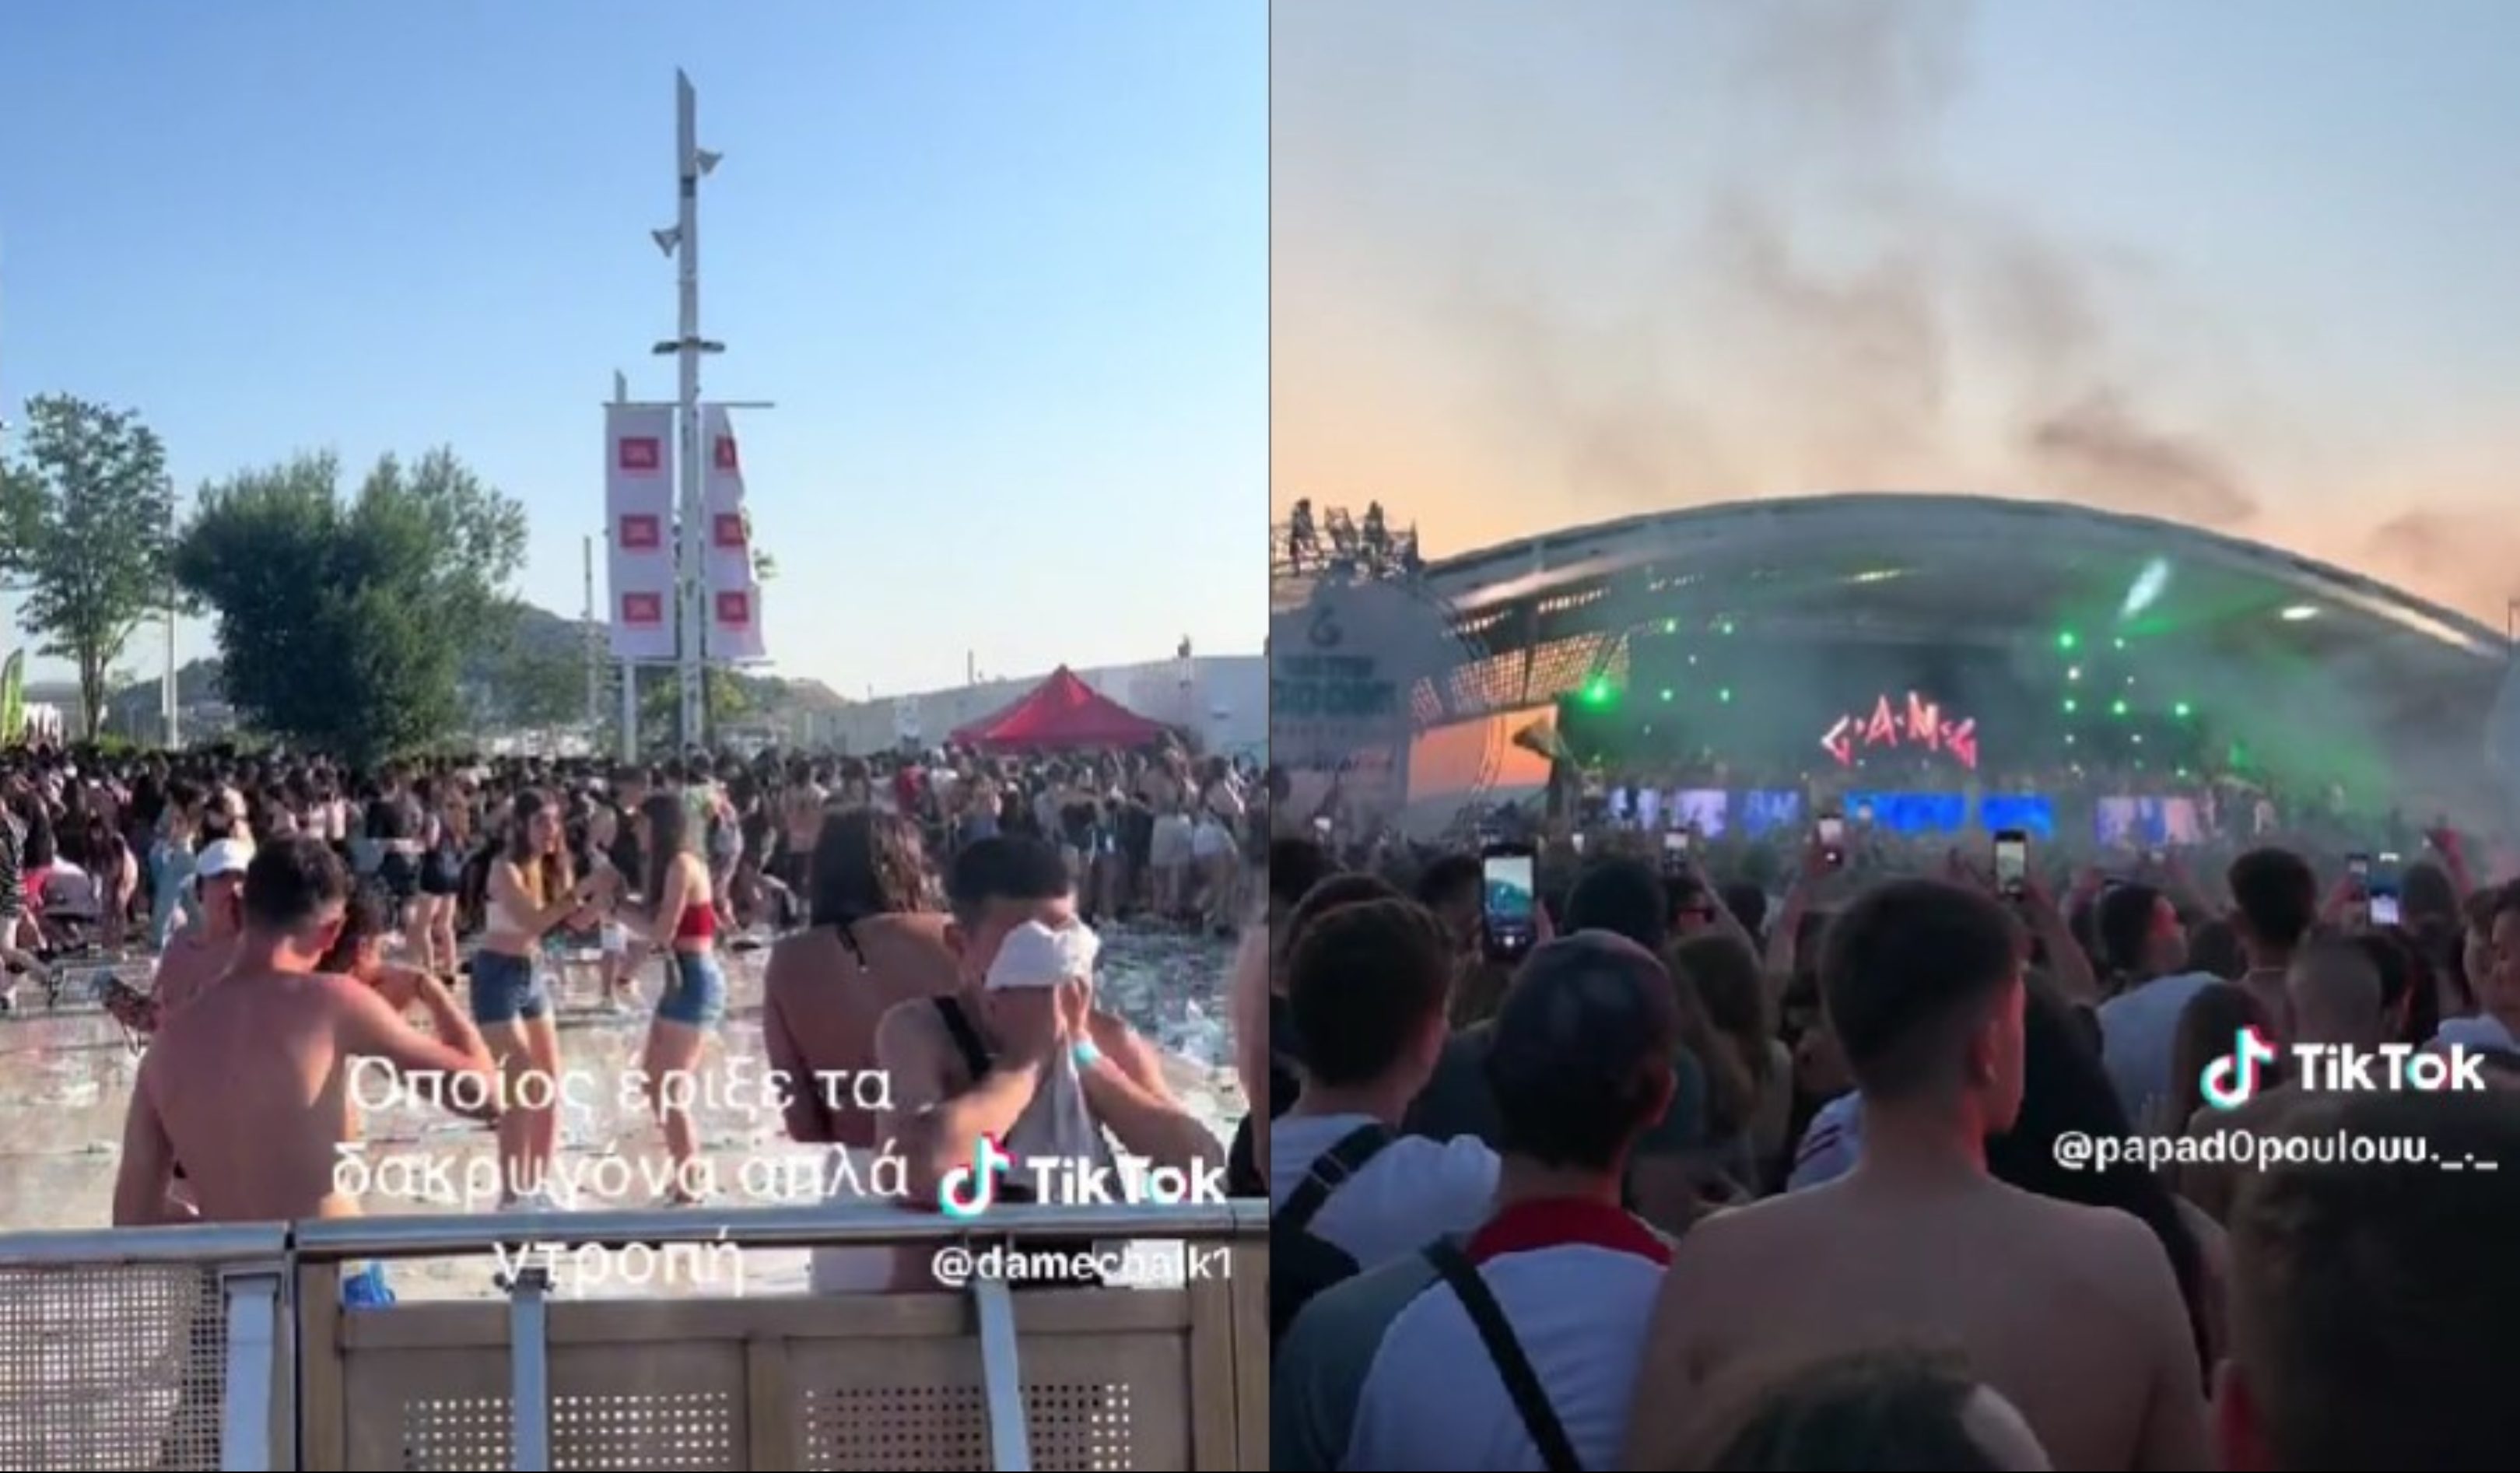 Waterboom Festival: Σκηνές πανικού στο ΟΑΚΑ - Έπεσαν δακρυγόνα στο πλήθος, ποδοπατήθηκαν έφηβοι